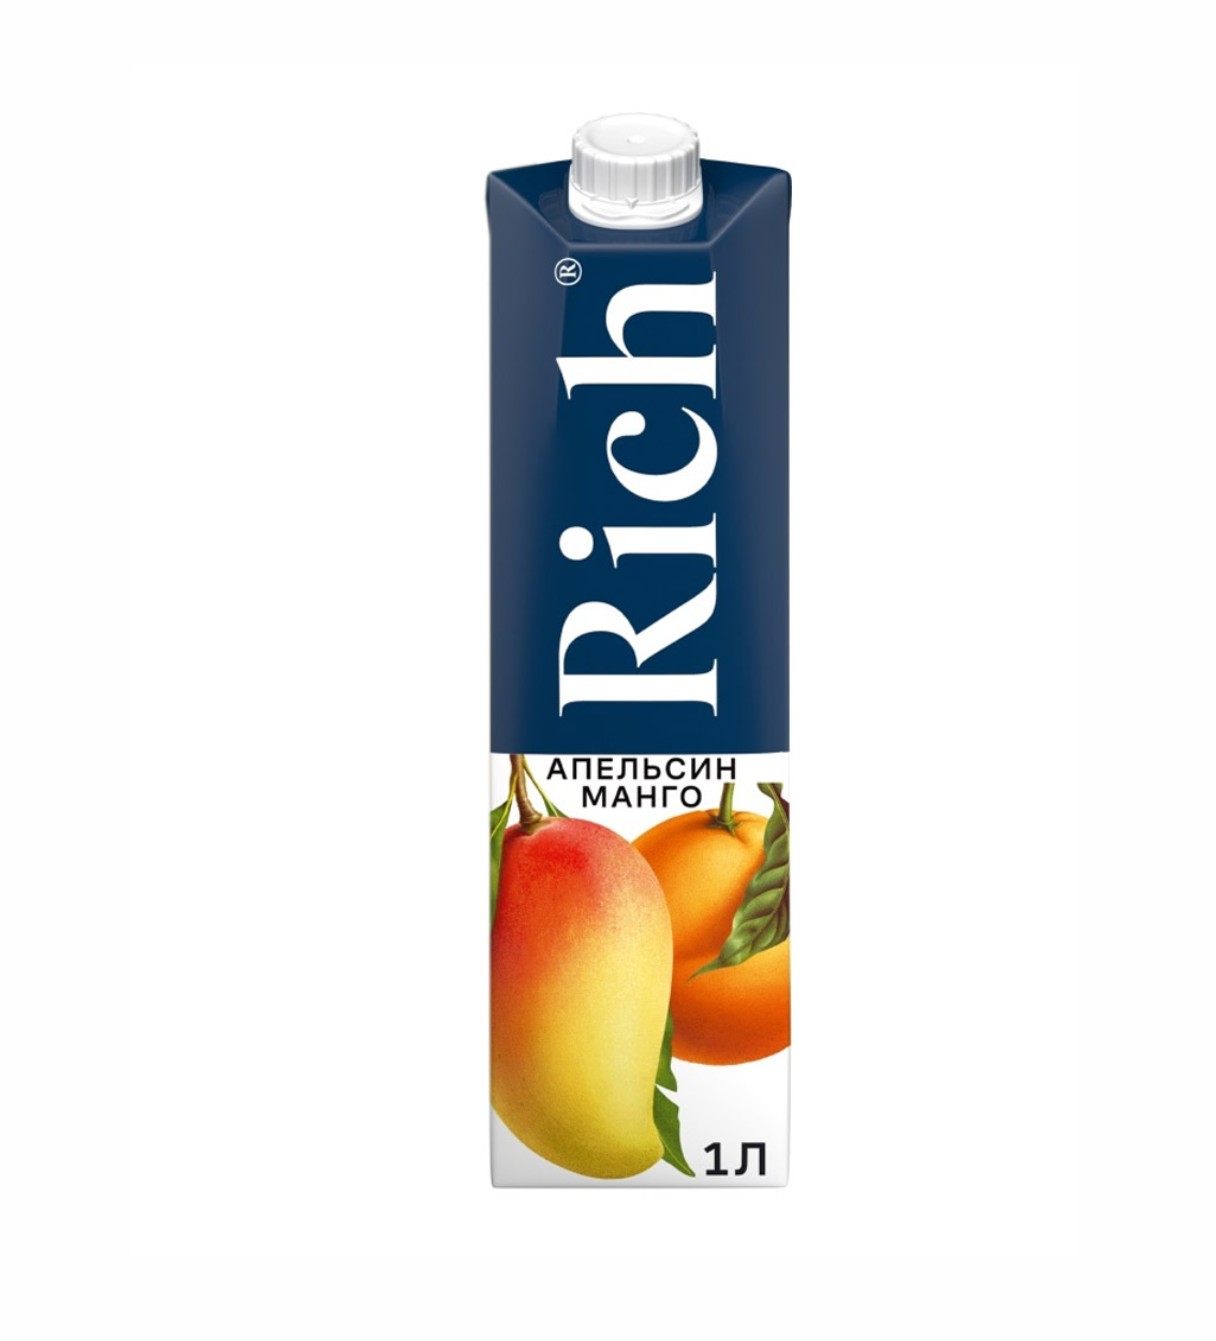 Сок Rich манго апельсин, tetrapak (1L)